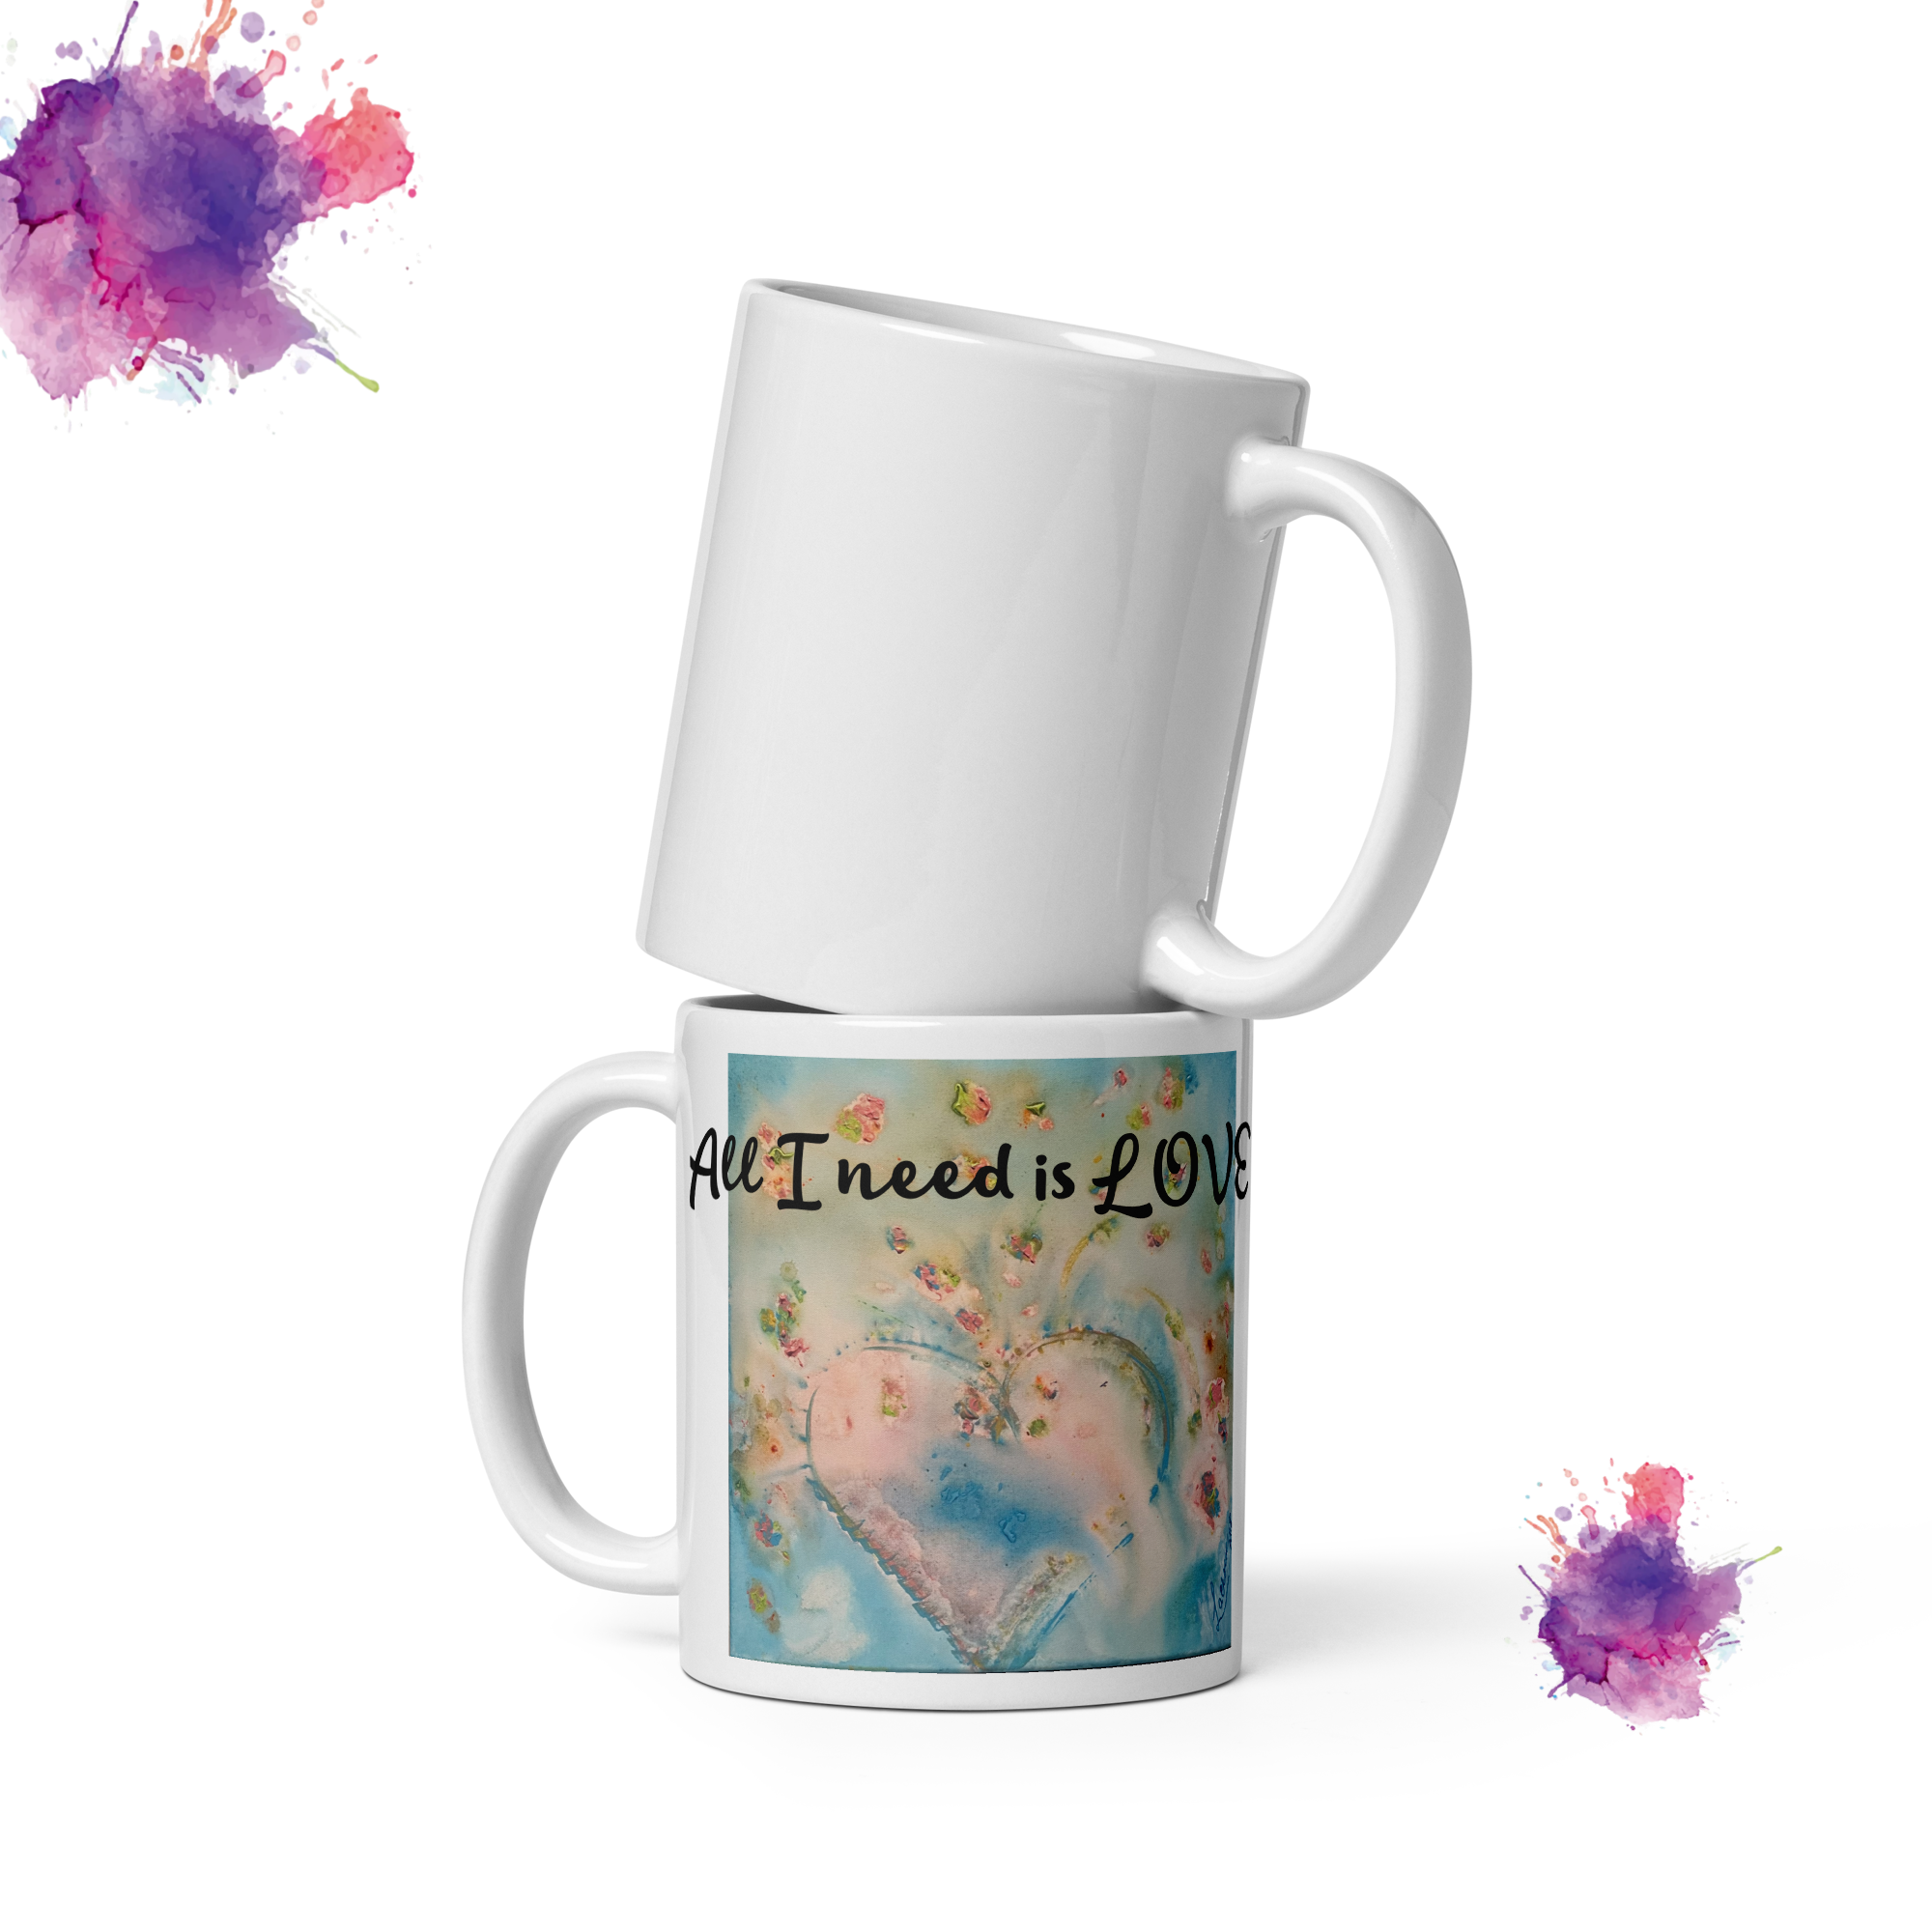 All I need is L♥VE - White glossy mug